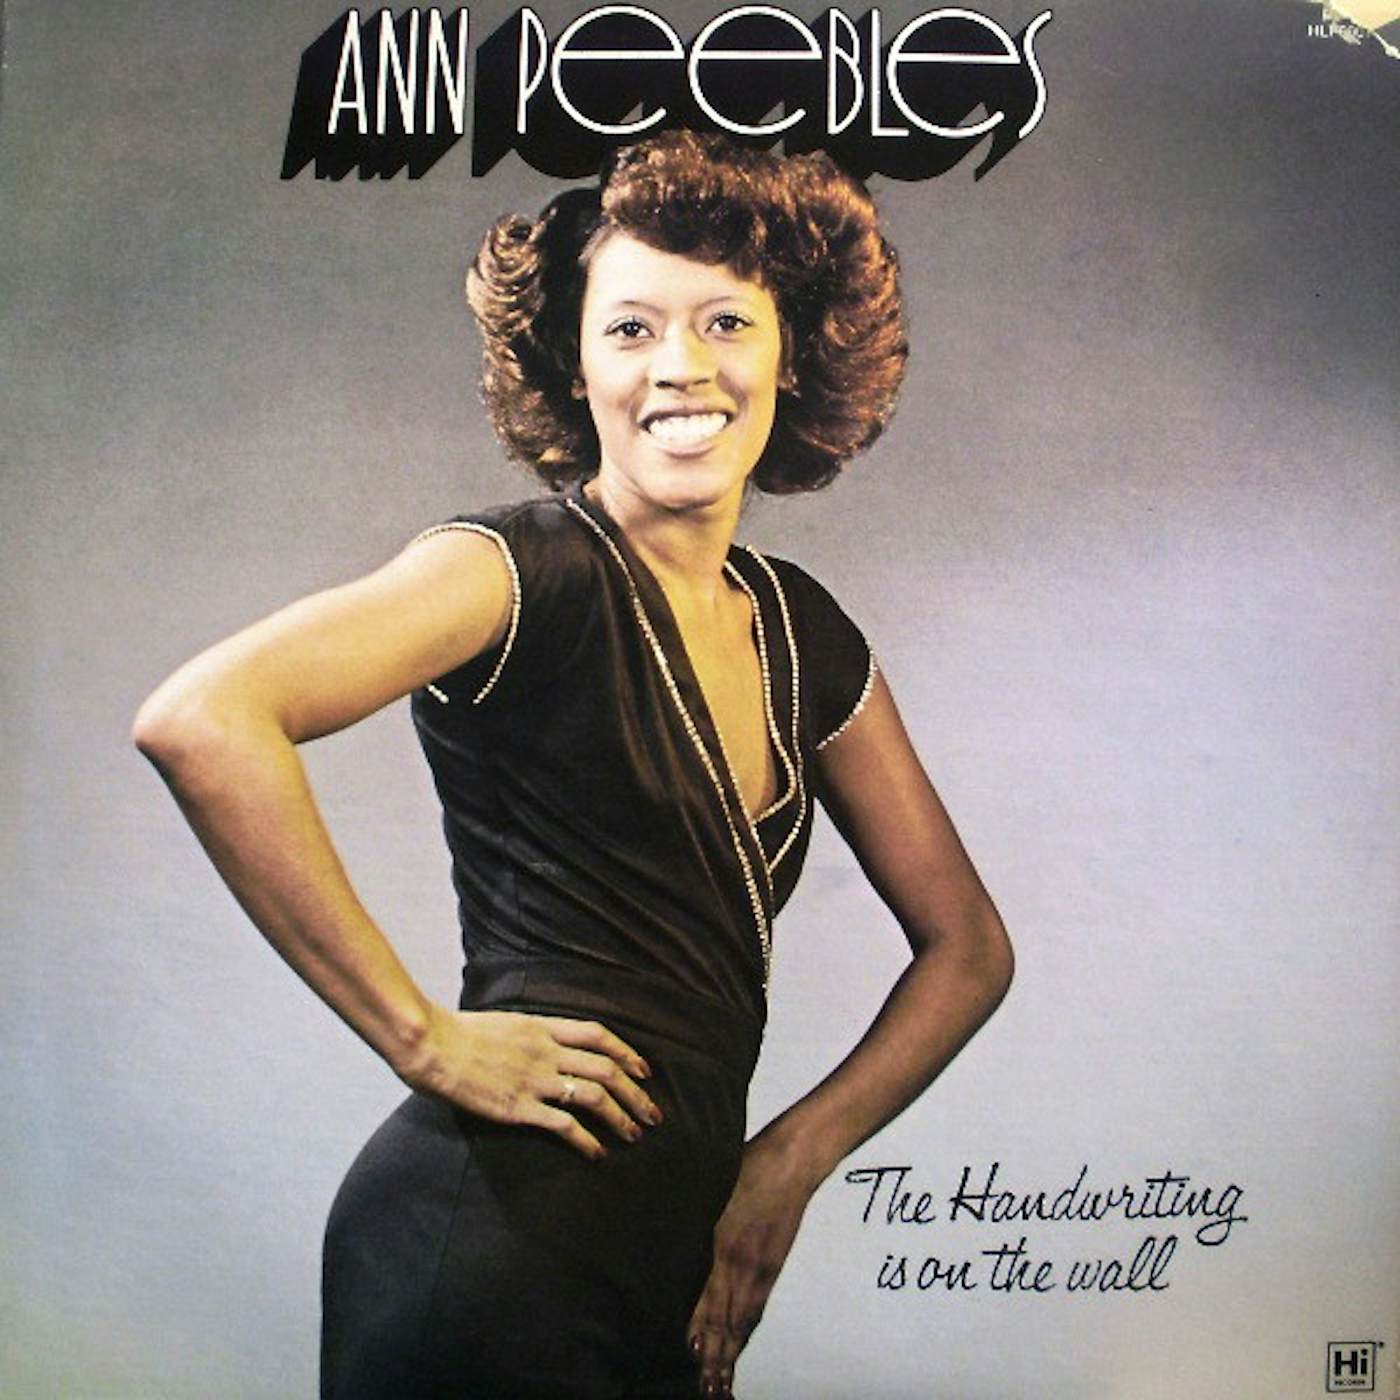 Ann Peebles HANDWRITING IS ON WALL Vinyl Record